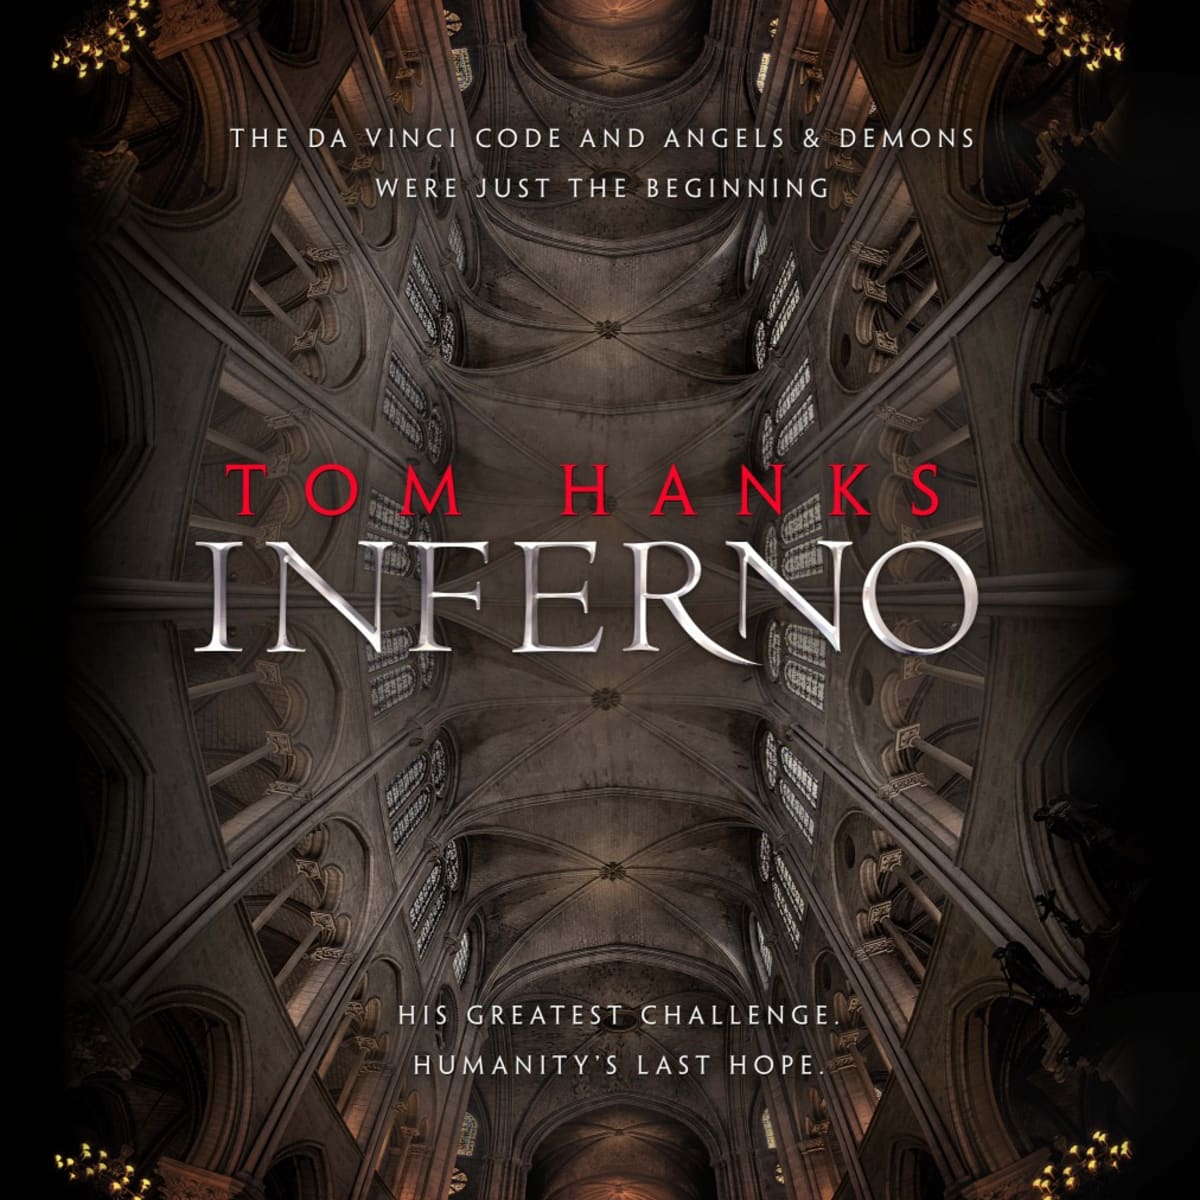 Inferno” movie review